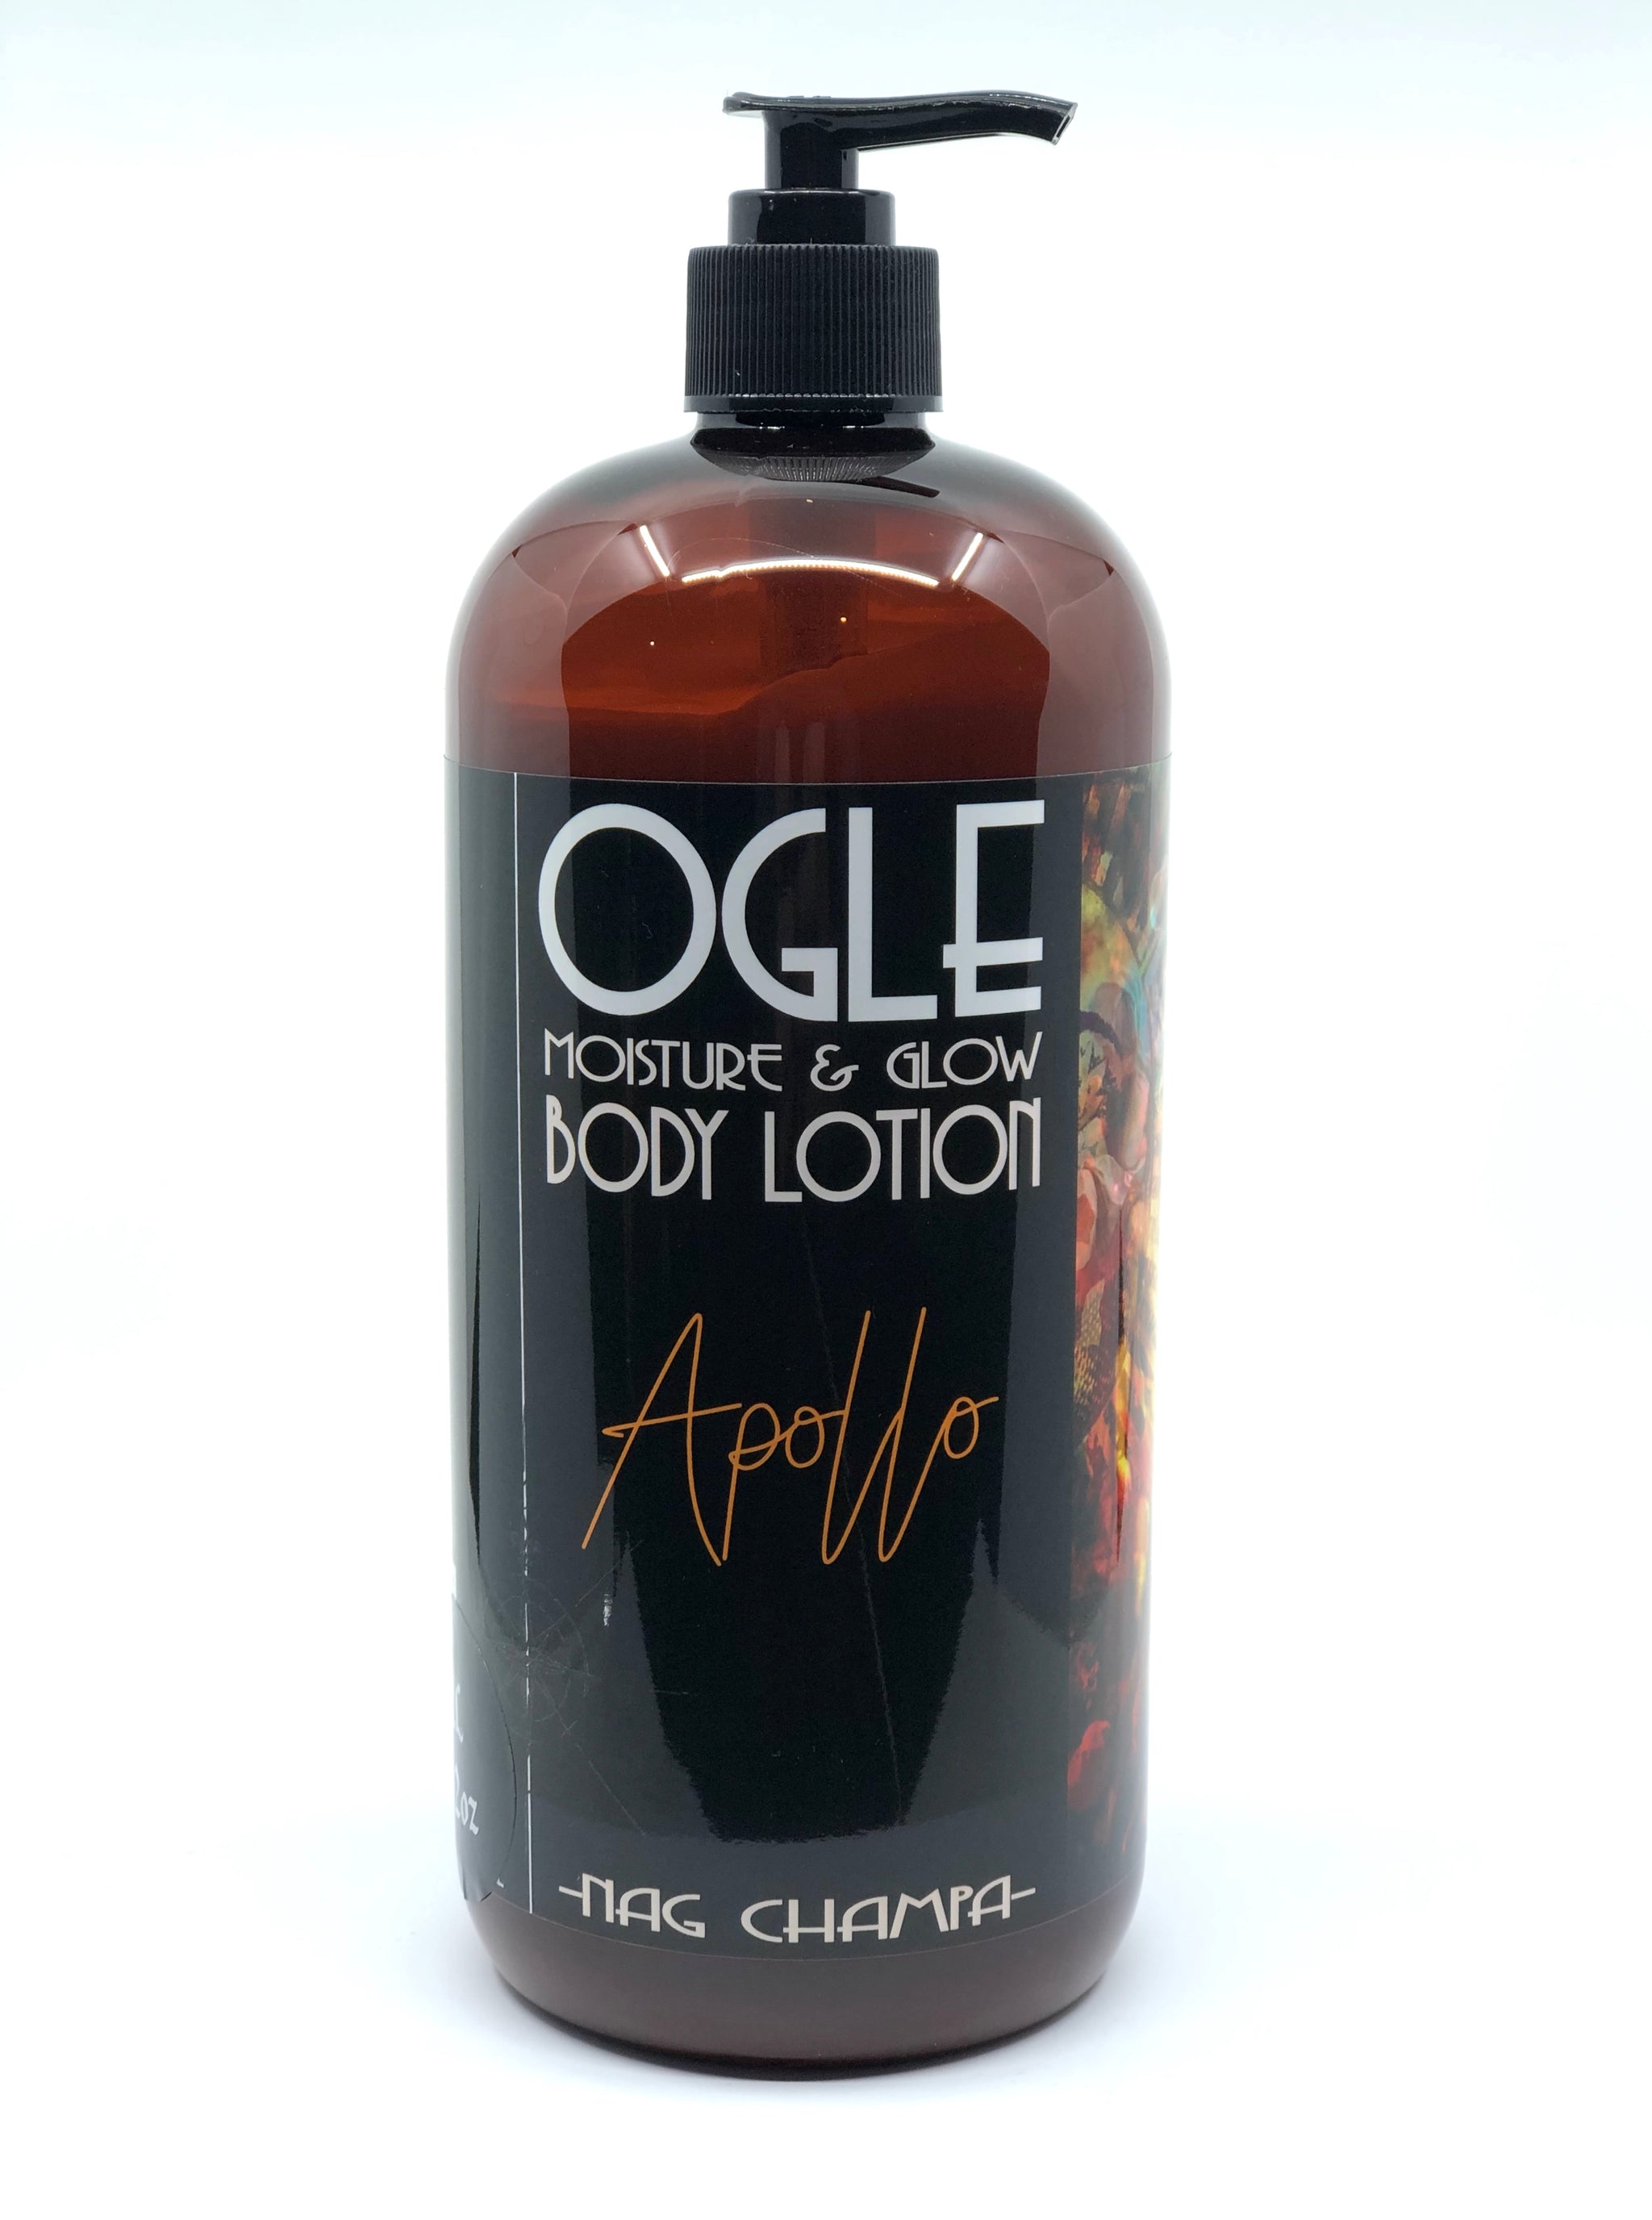 Apollo Body Lotion (Nag Champa) - Ogle Products